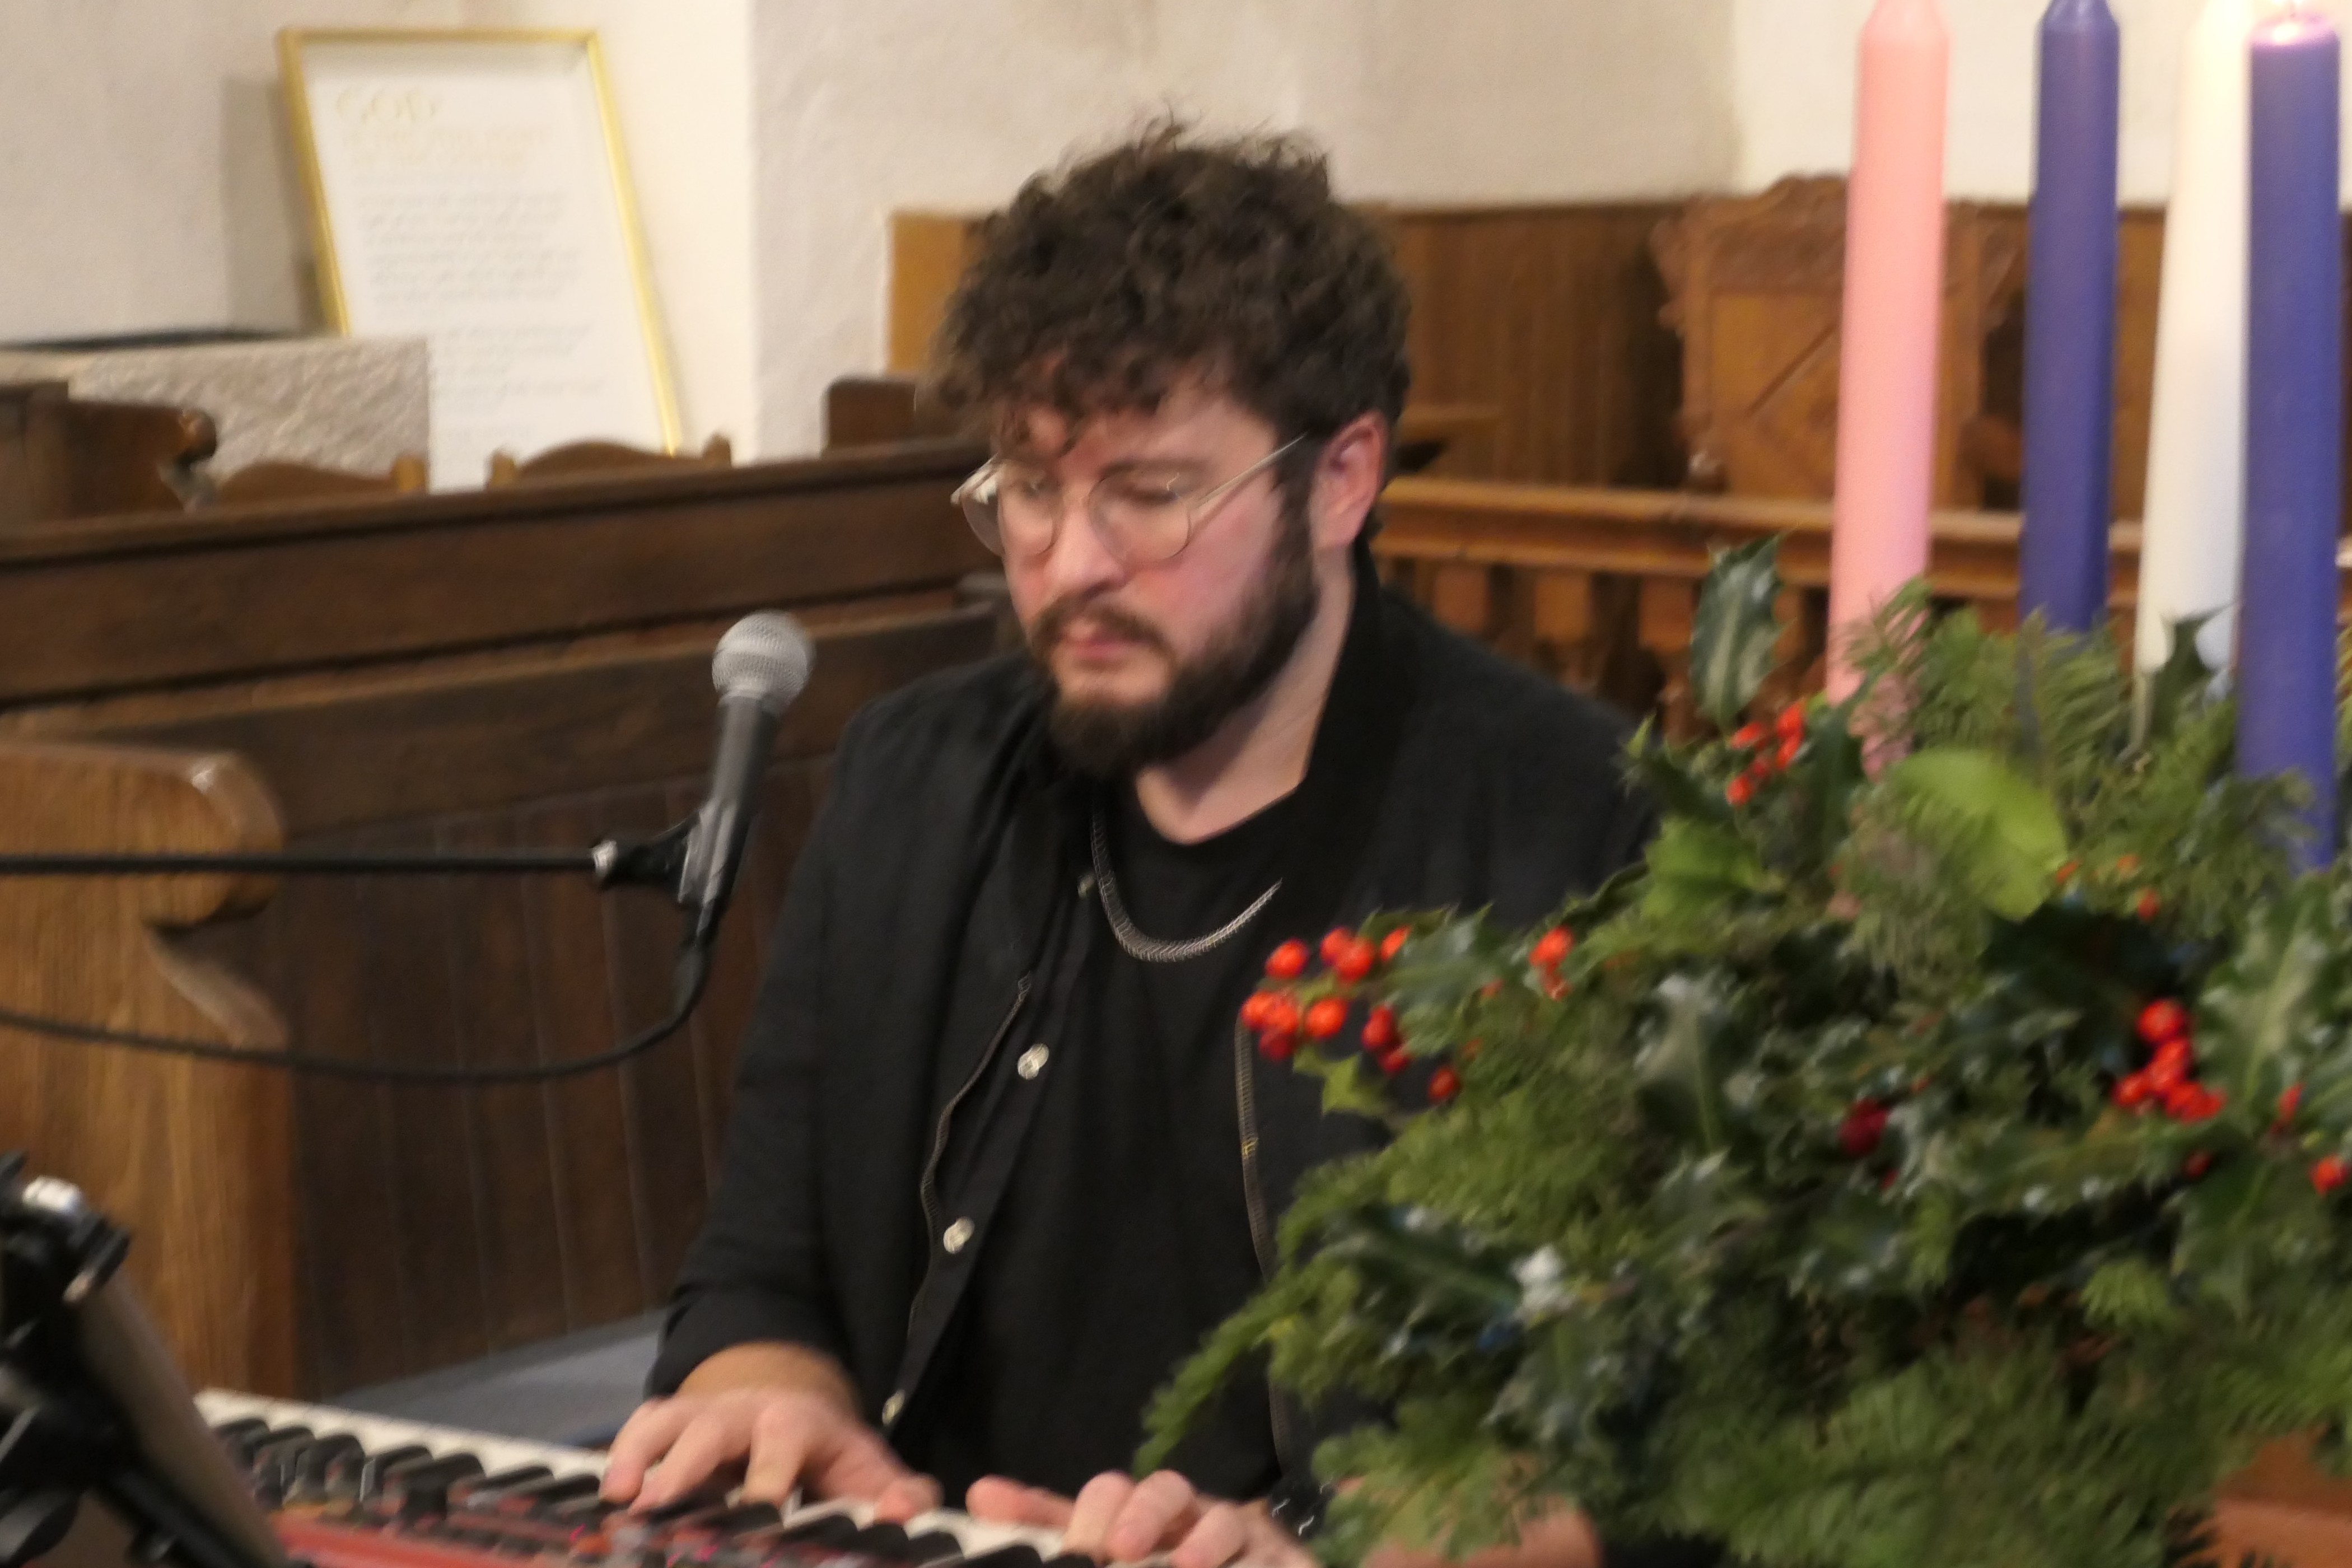 Ben Goble: Music for the Christmas season